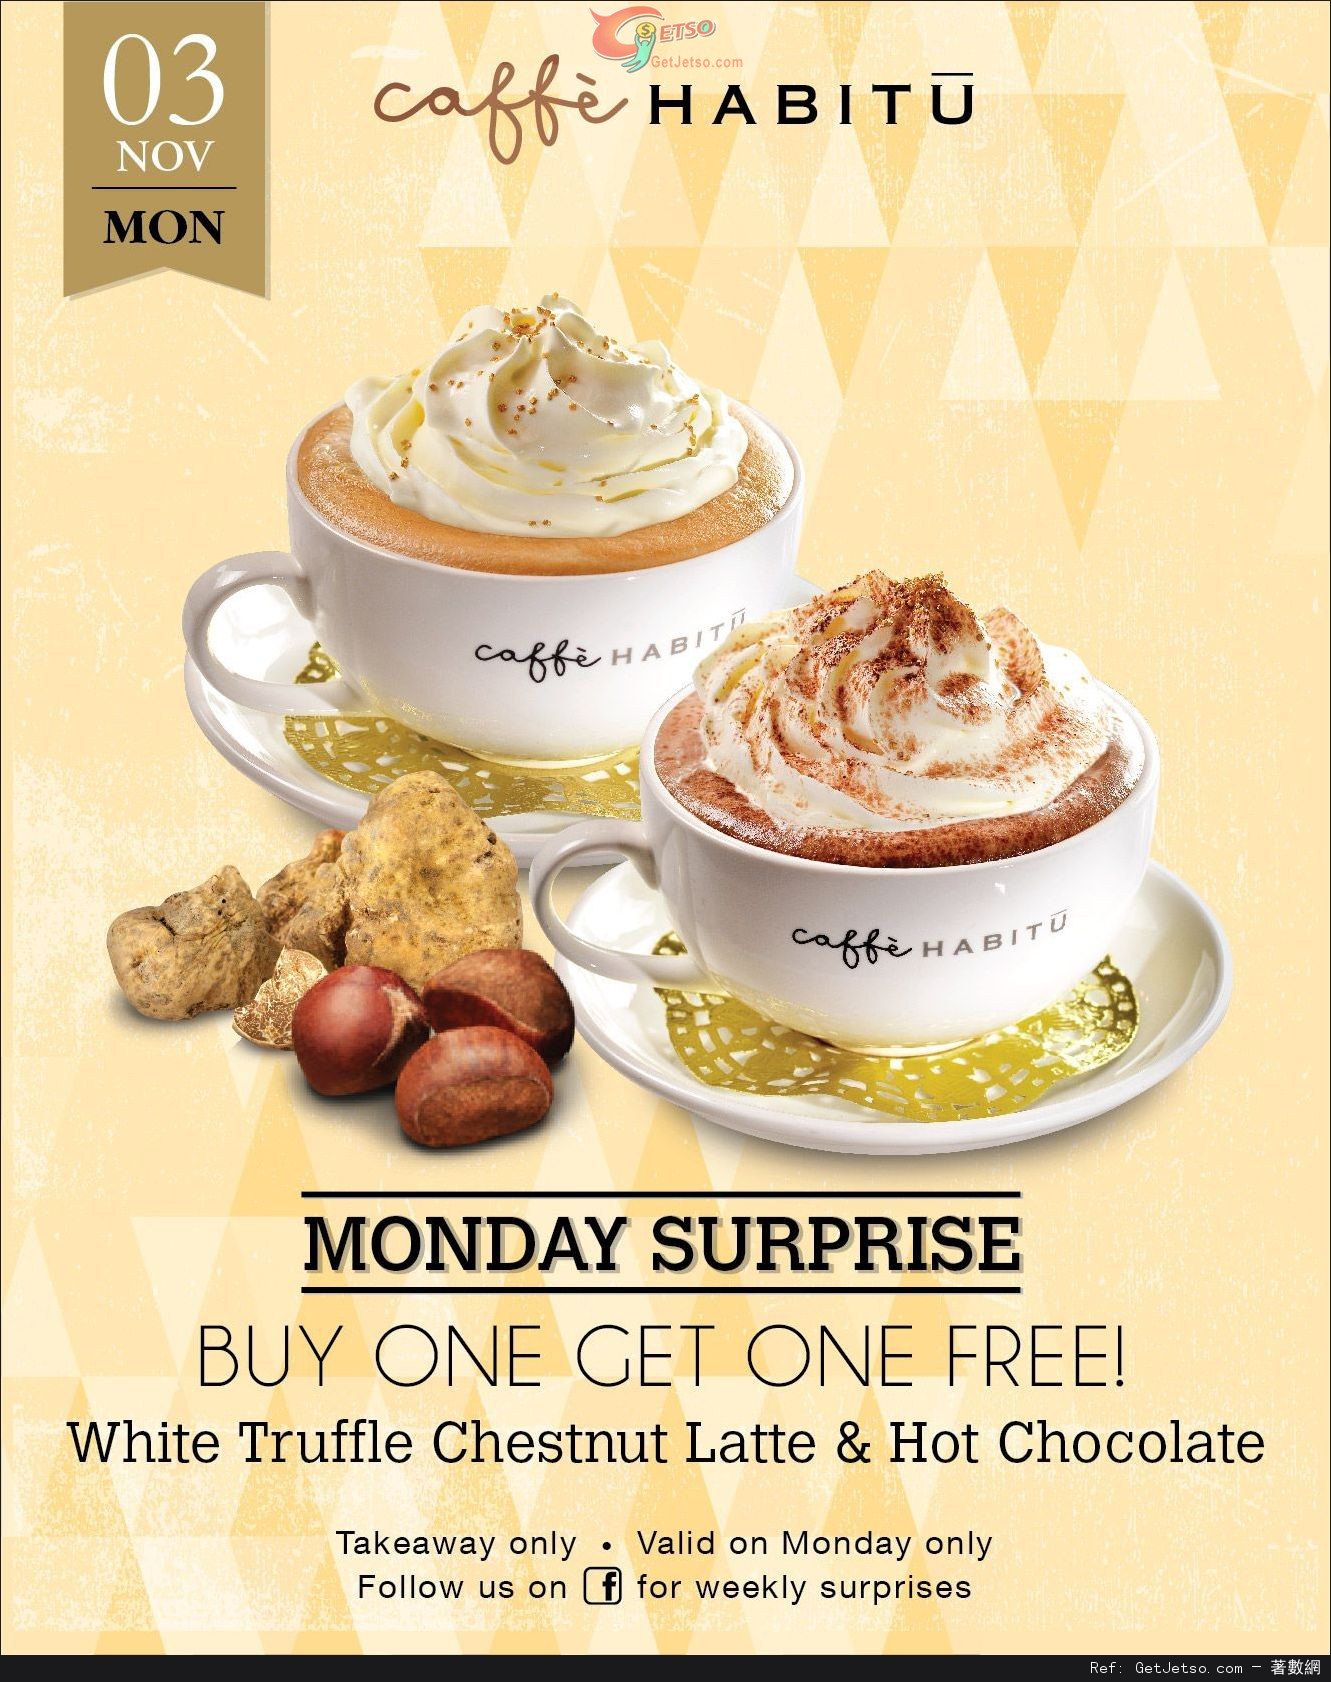 Caffe HABITU White Truffle Chestnut Latte &Hot Chocolate 買1送1優惠(14年11月3日)圖片1